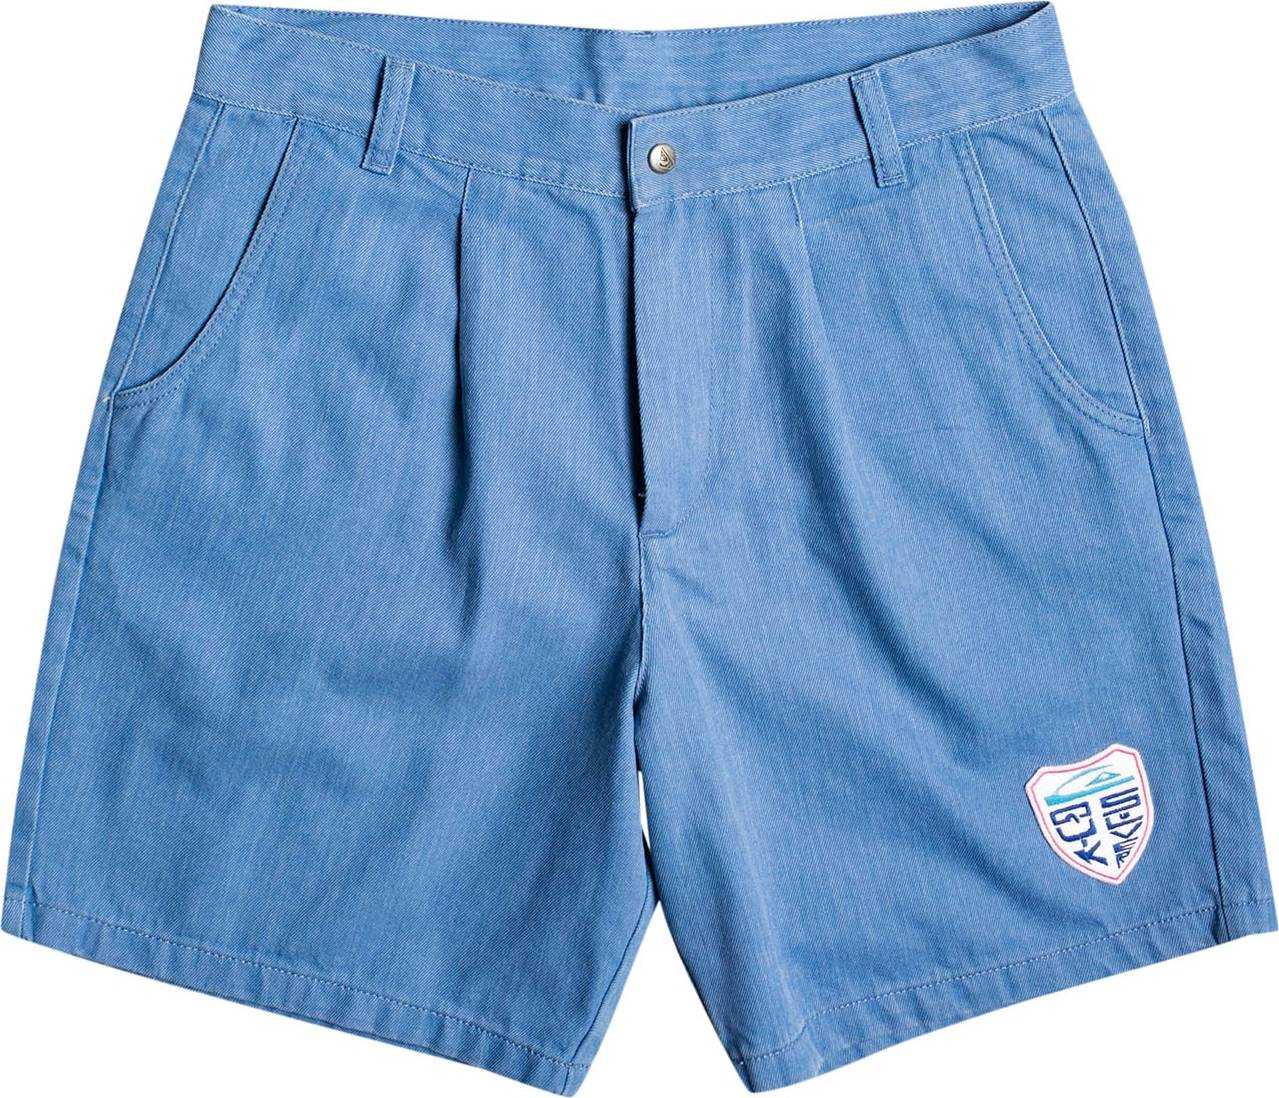 QUIKSILVER Outdoorové kalhoty 'SUBURBIA' modrá džínovina